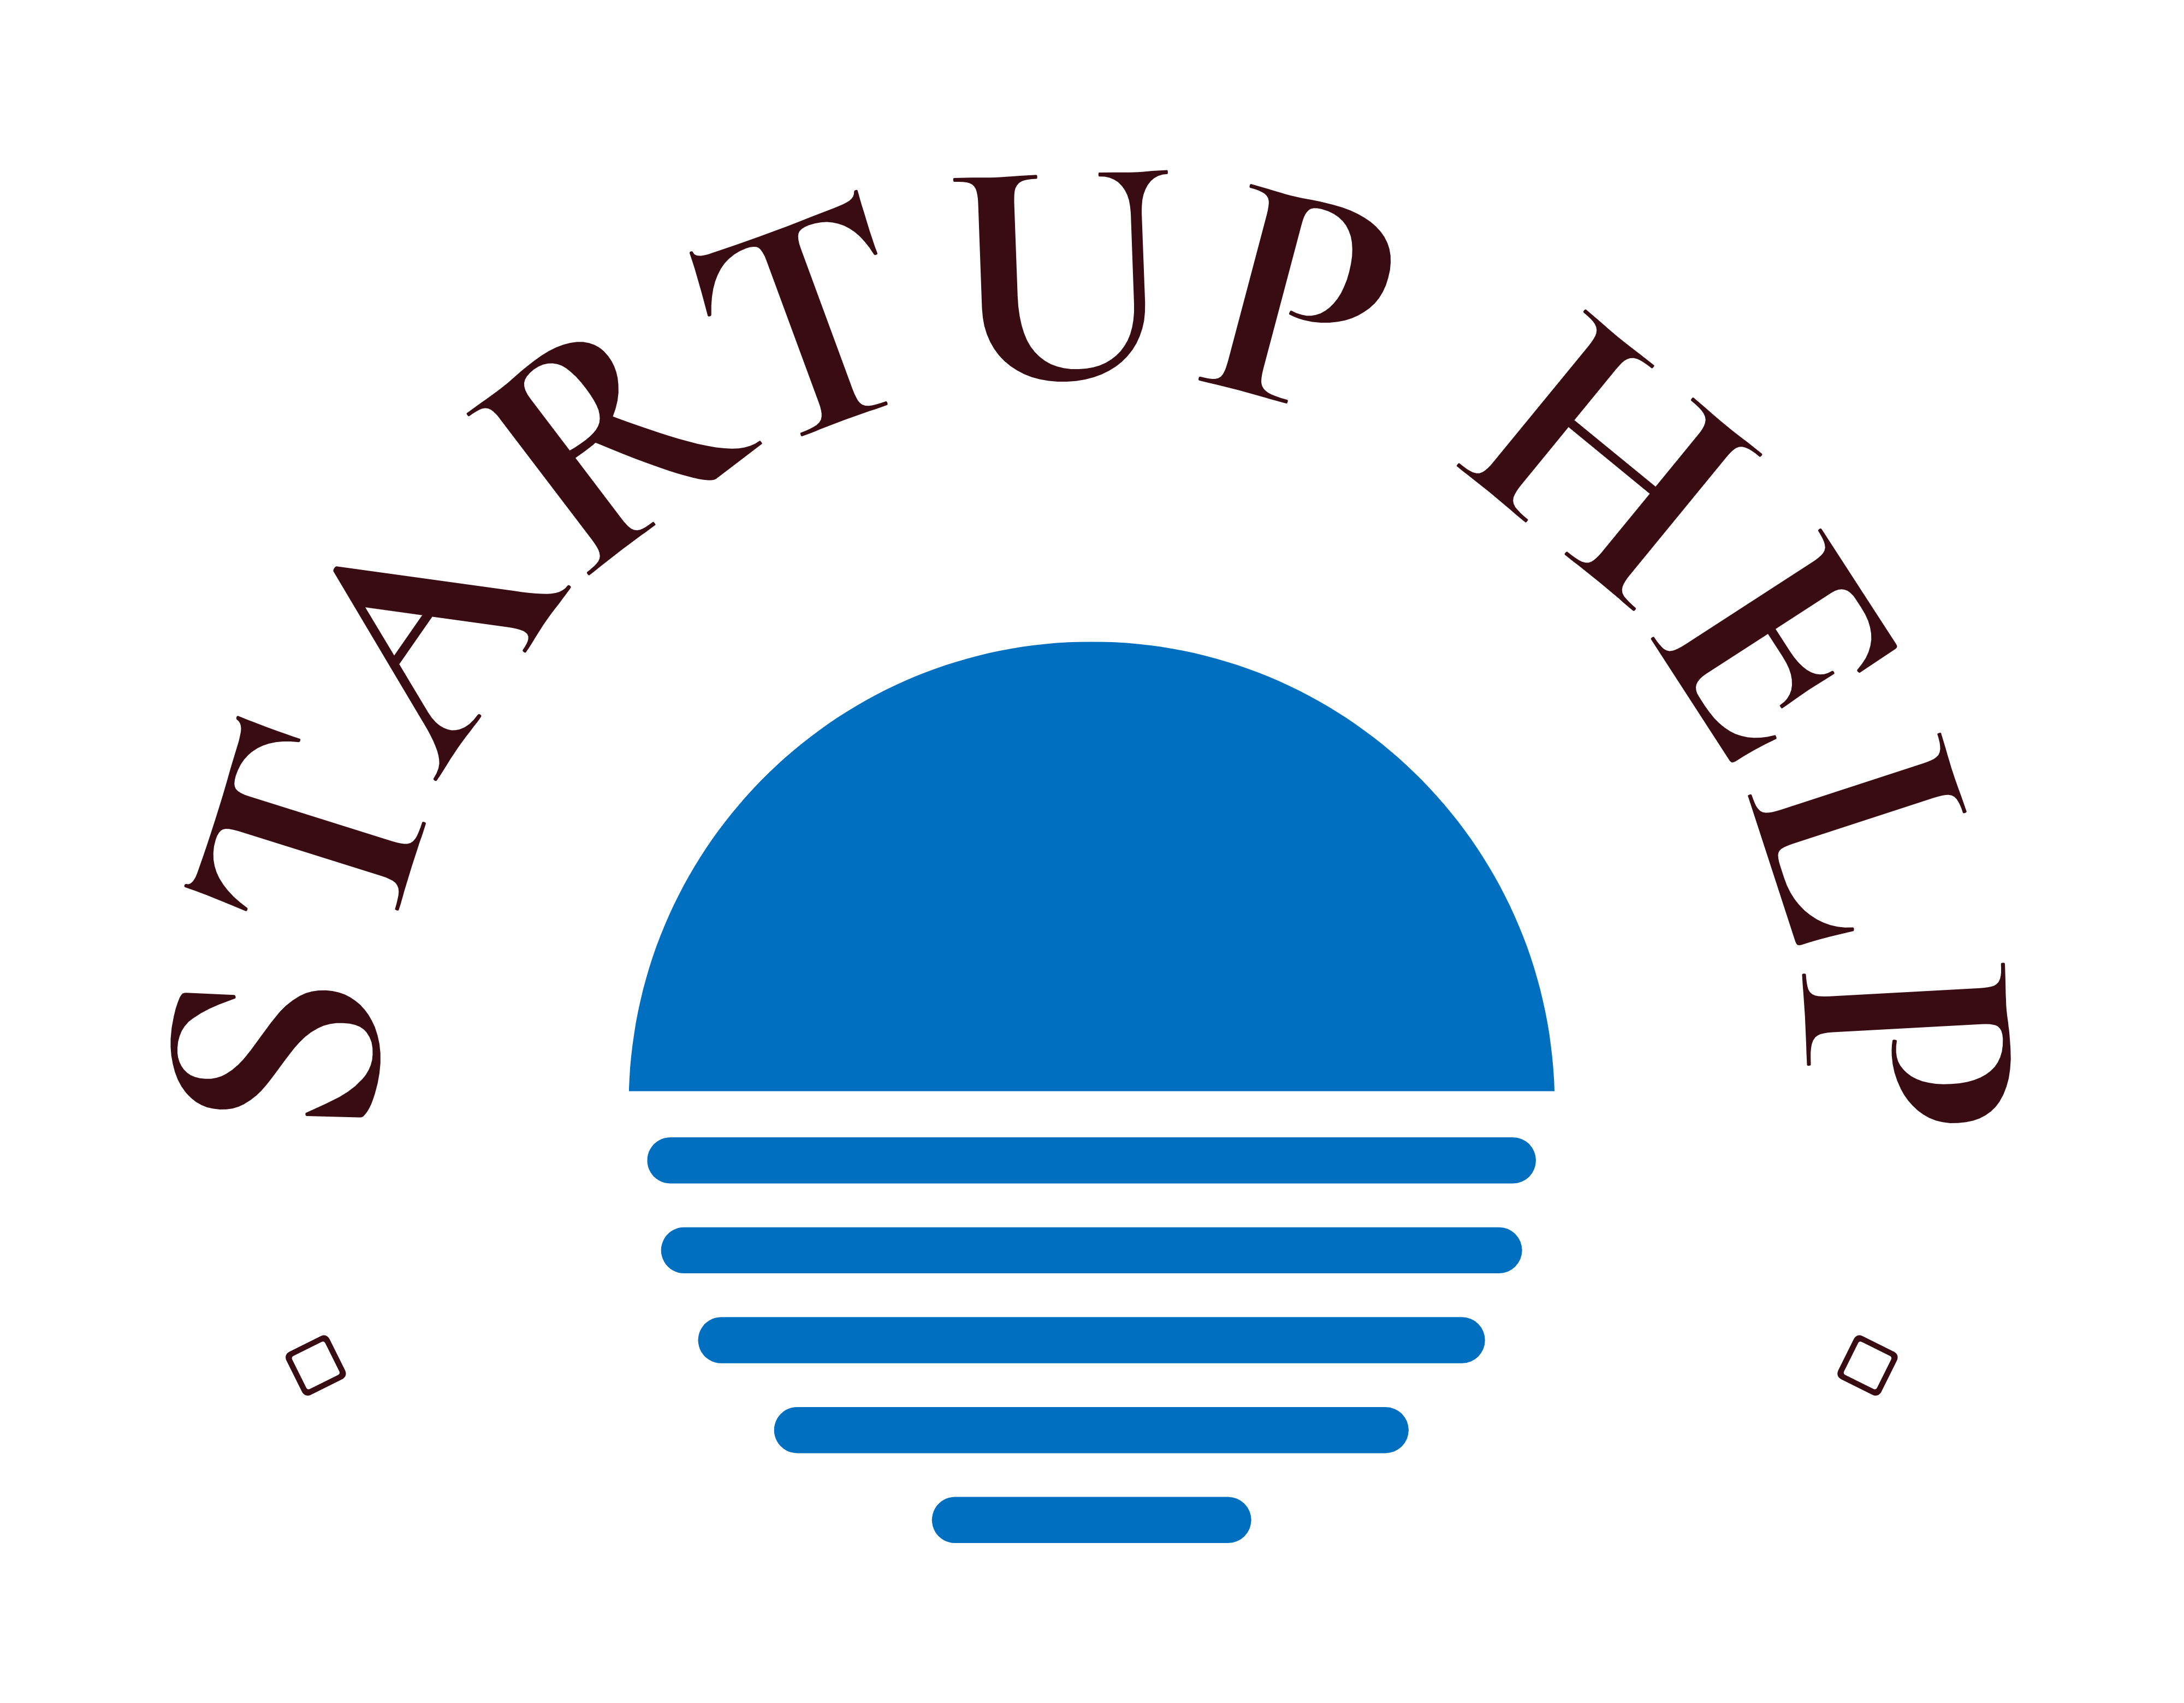 Startup Help Inc.